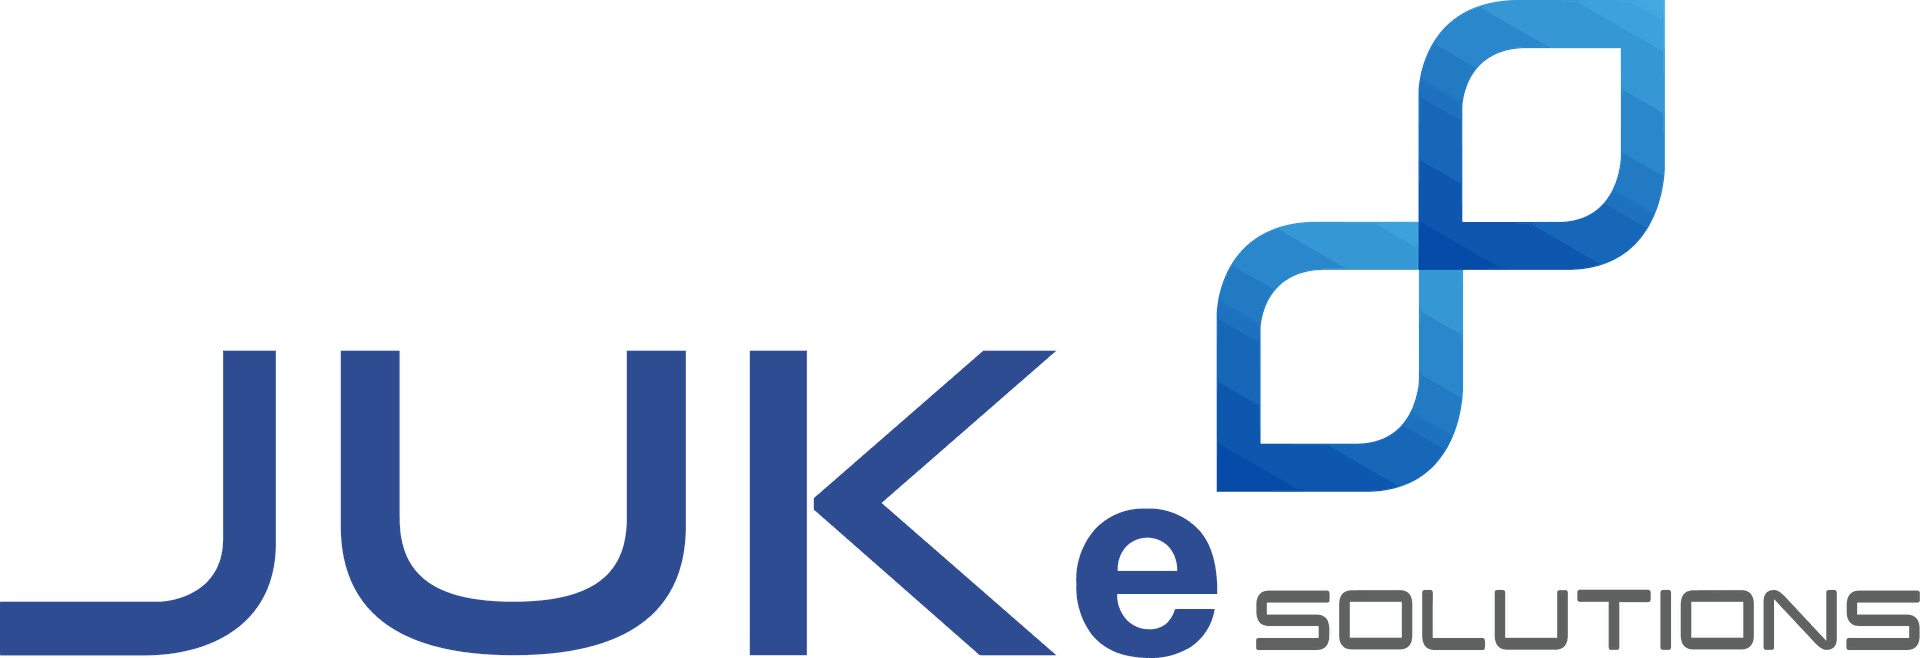 Juke Solutions